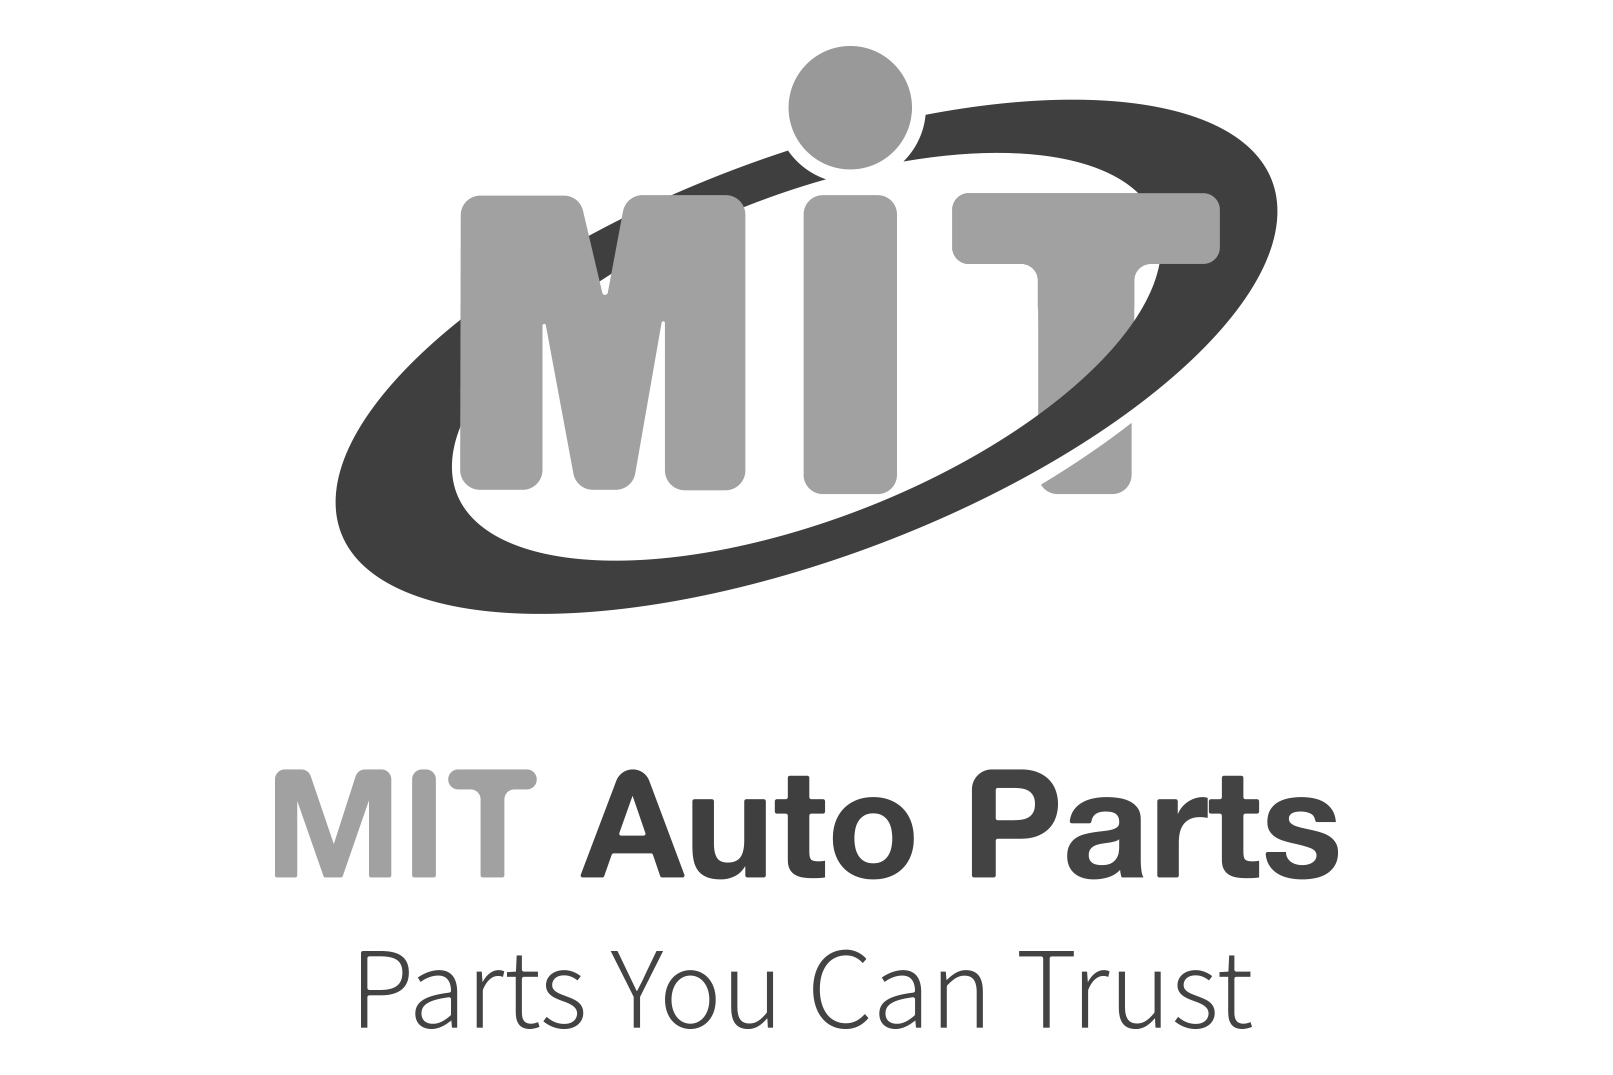 MIT Auto Parts 4x6